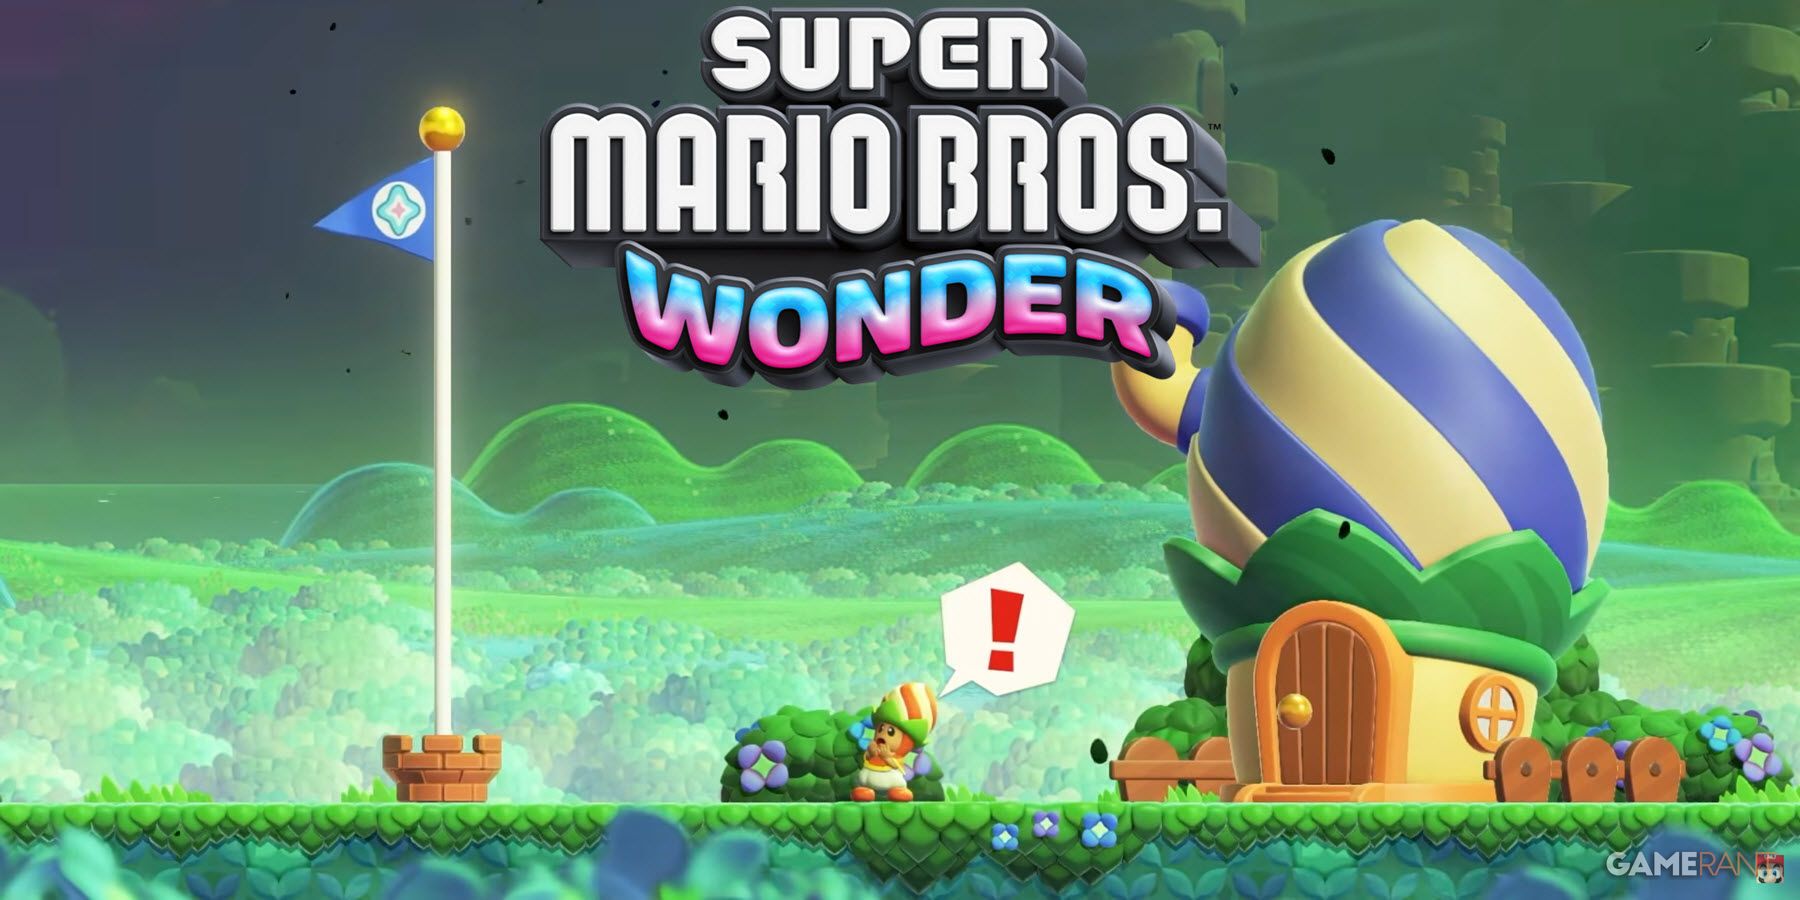 Super Mario Bros. Wonder expected release time, explored